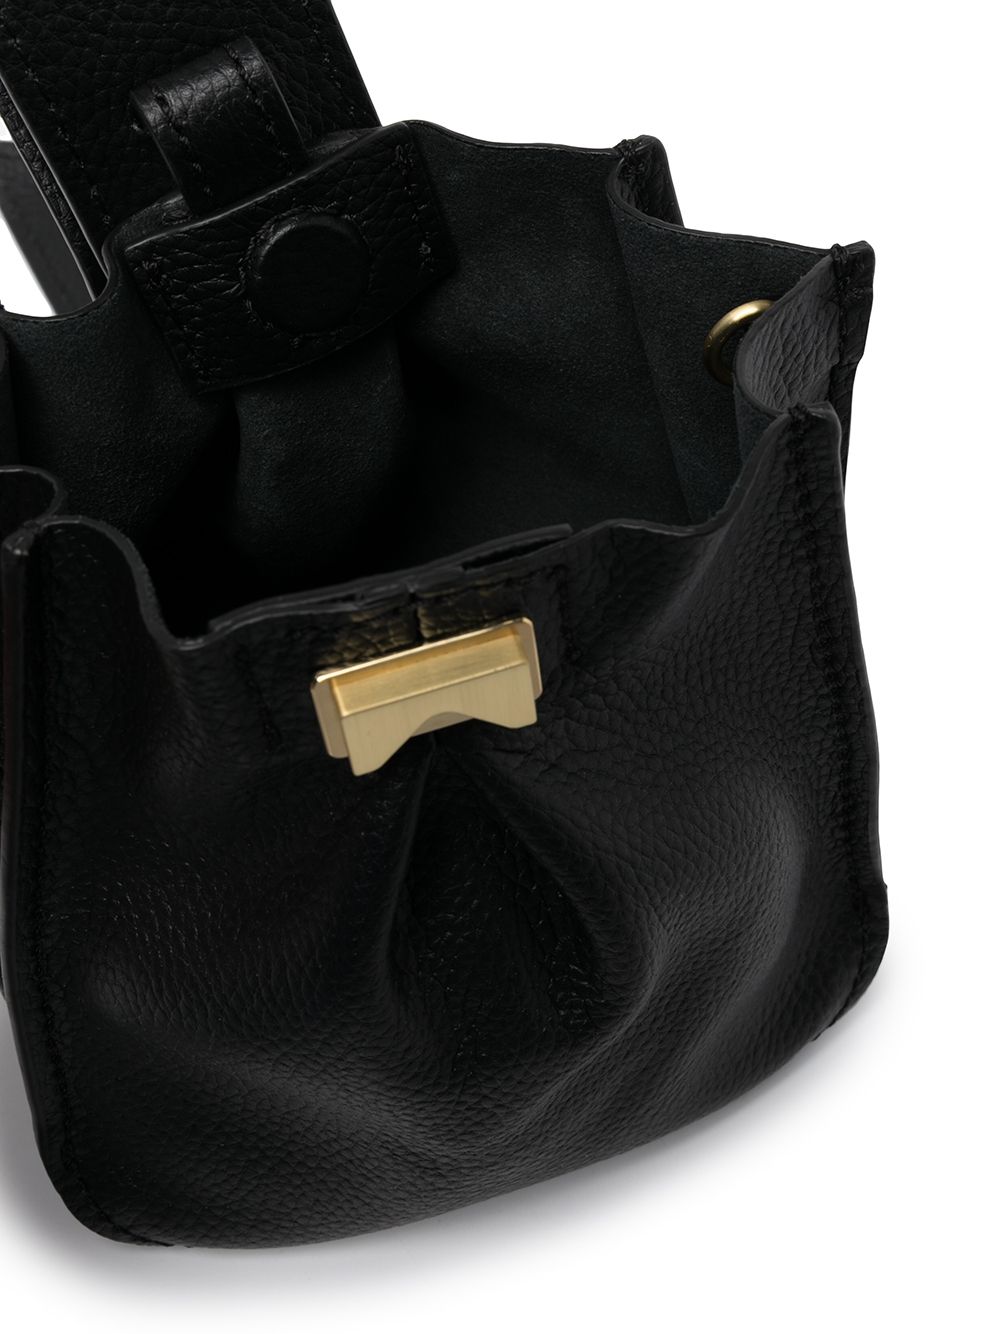 ZAC POSEN Anthea Shopper Crossbody Satchel Tote Bag Purse~ Leather Mint NWT